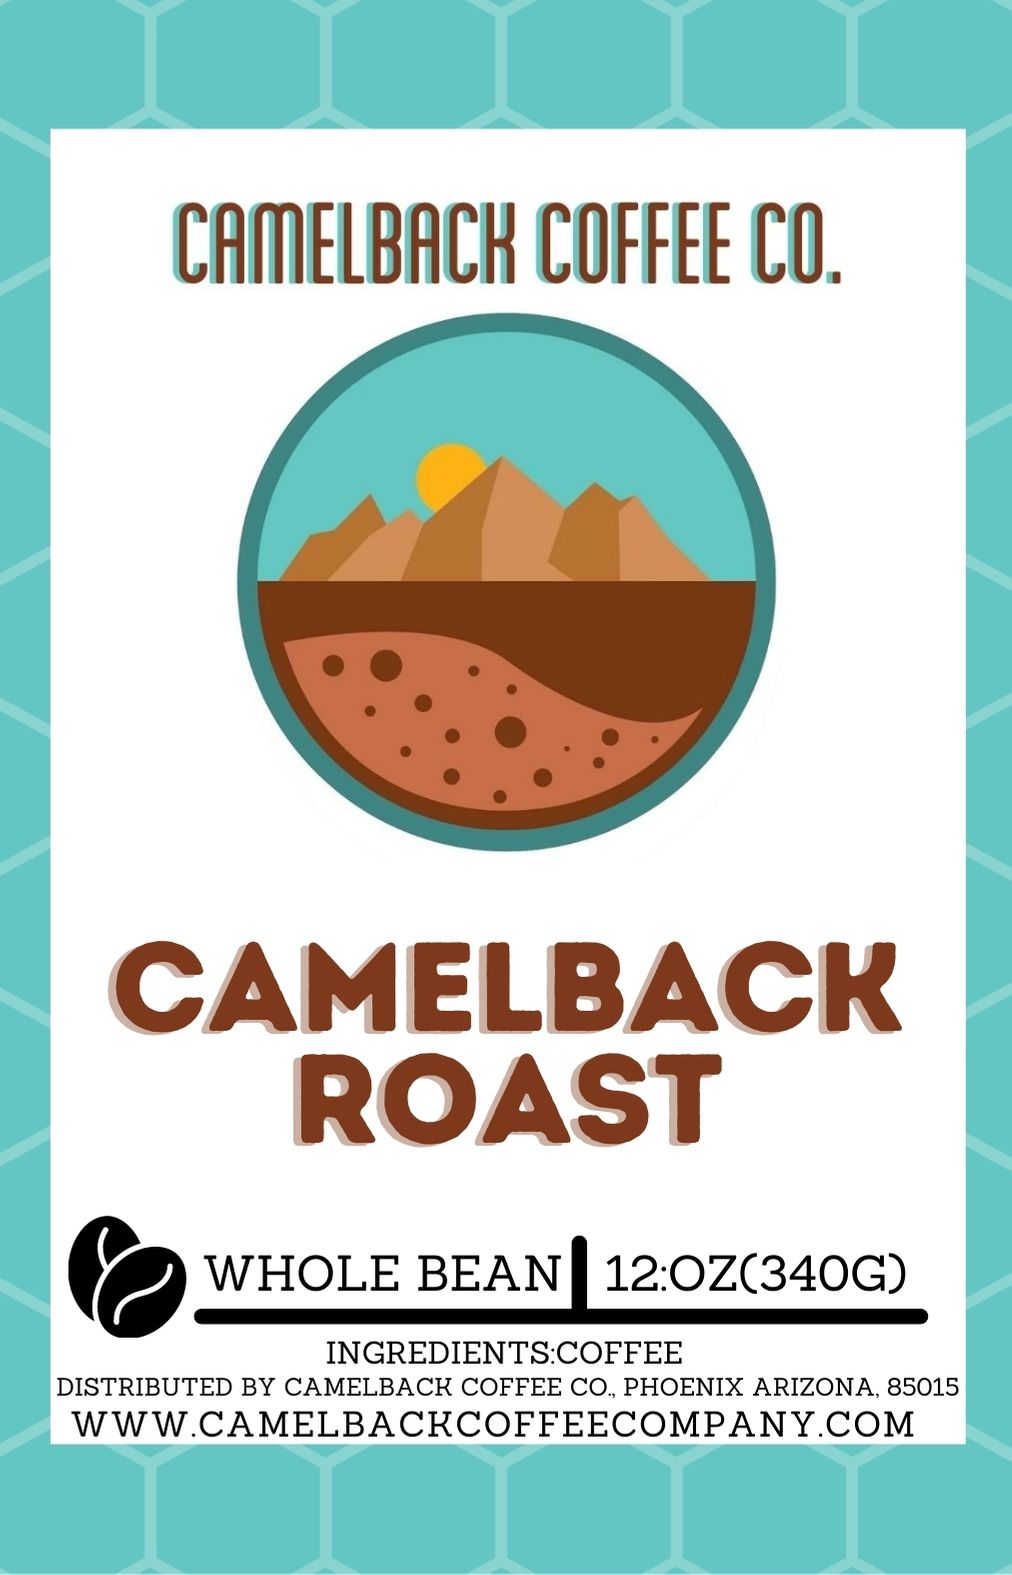 Camelback Roast - Camelback Coffee